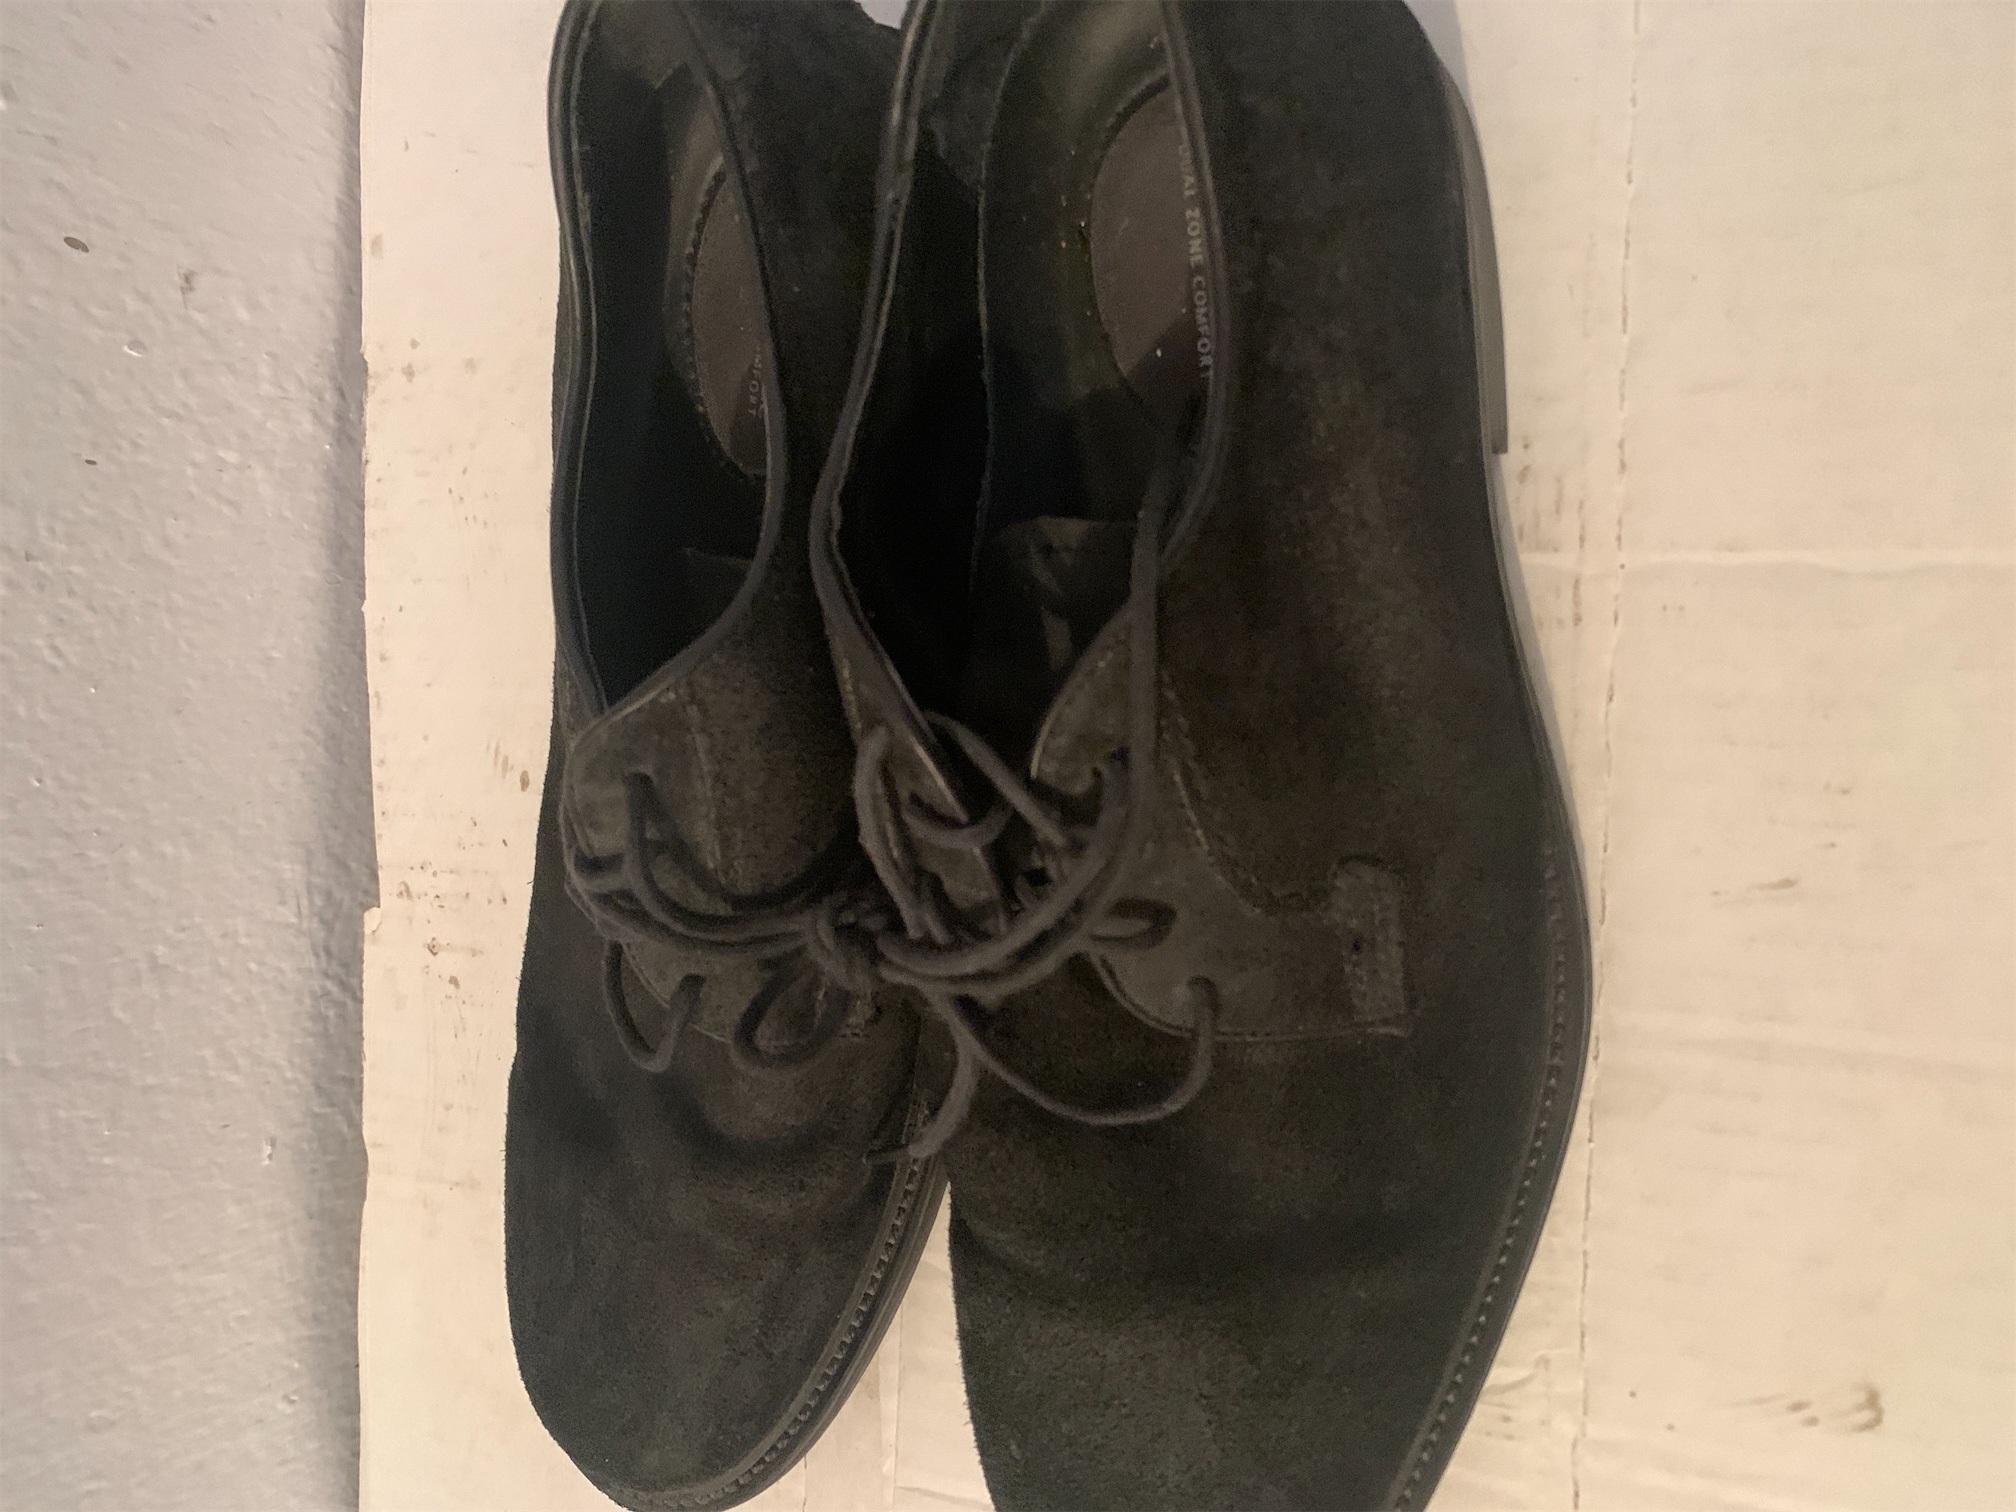 deportes - Zapatos de hombre Banana Republic size 8m color negro